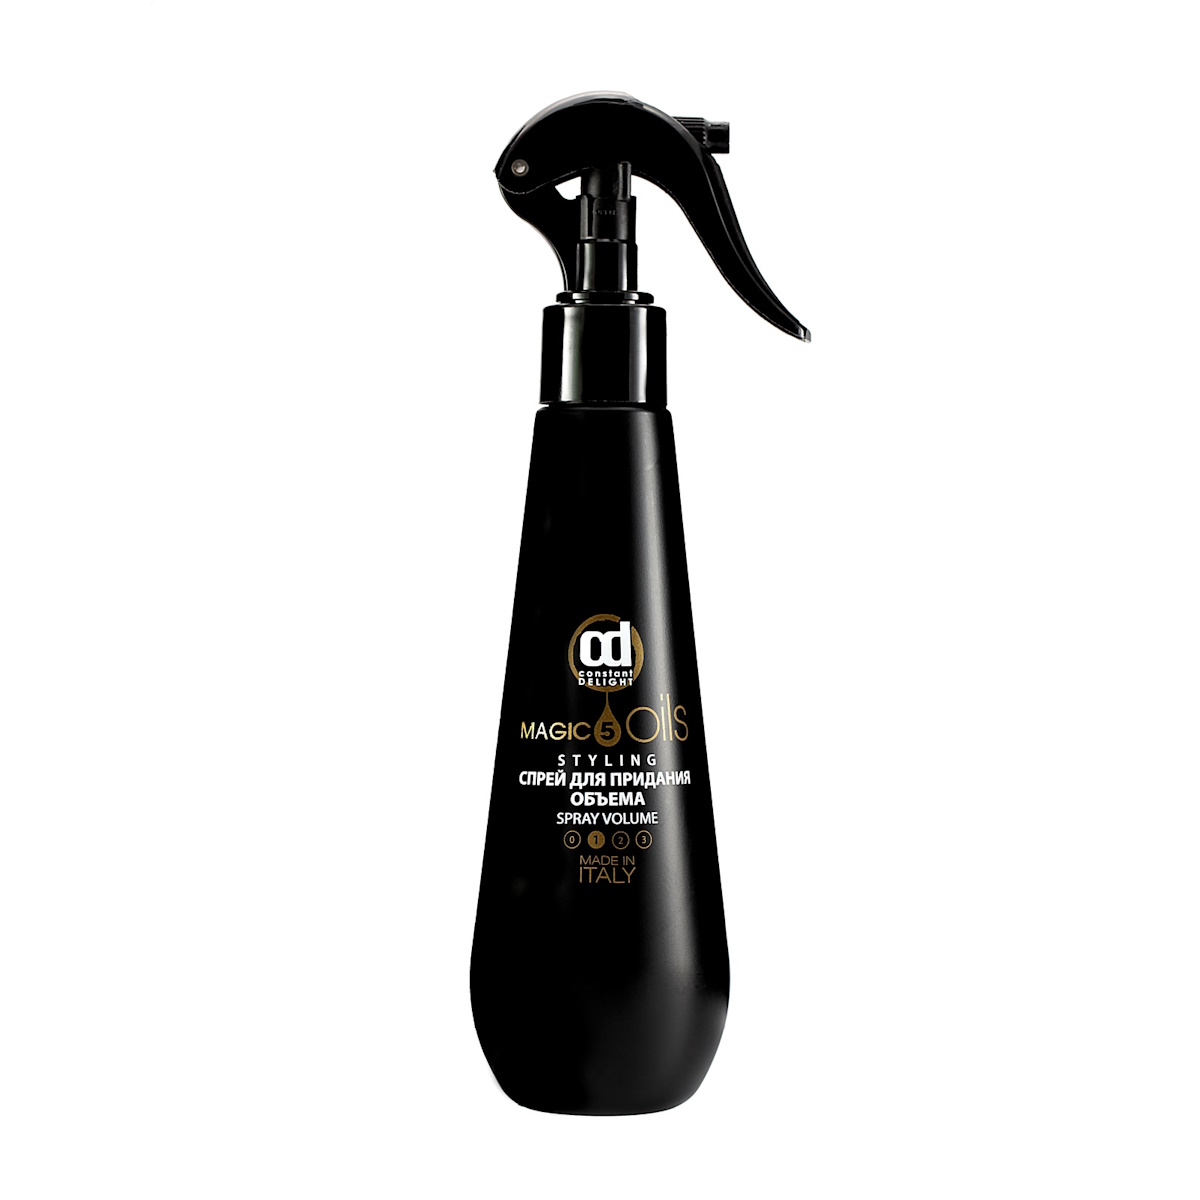 Спрей Constant Delight 5 Magic Oils Styling для придания объема, 200 мл несмываемый спрей для придания объема волосам volumizing spray